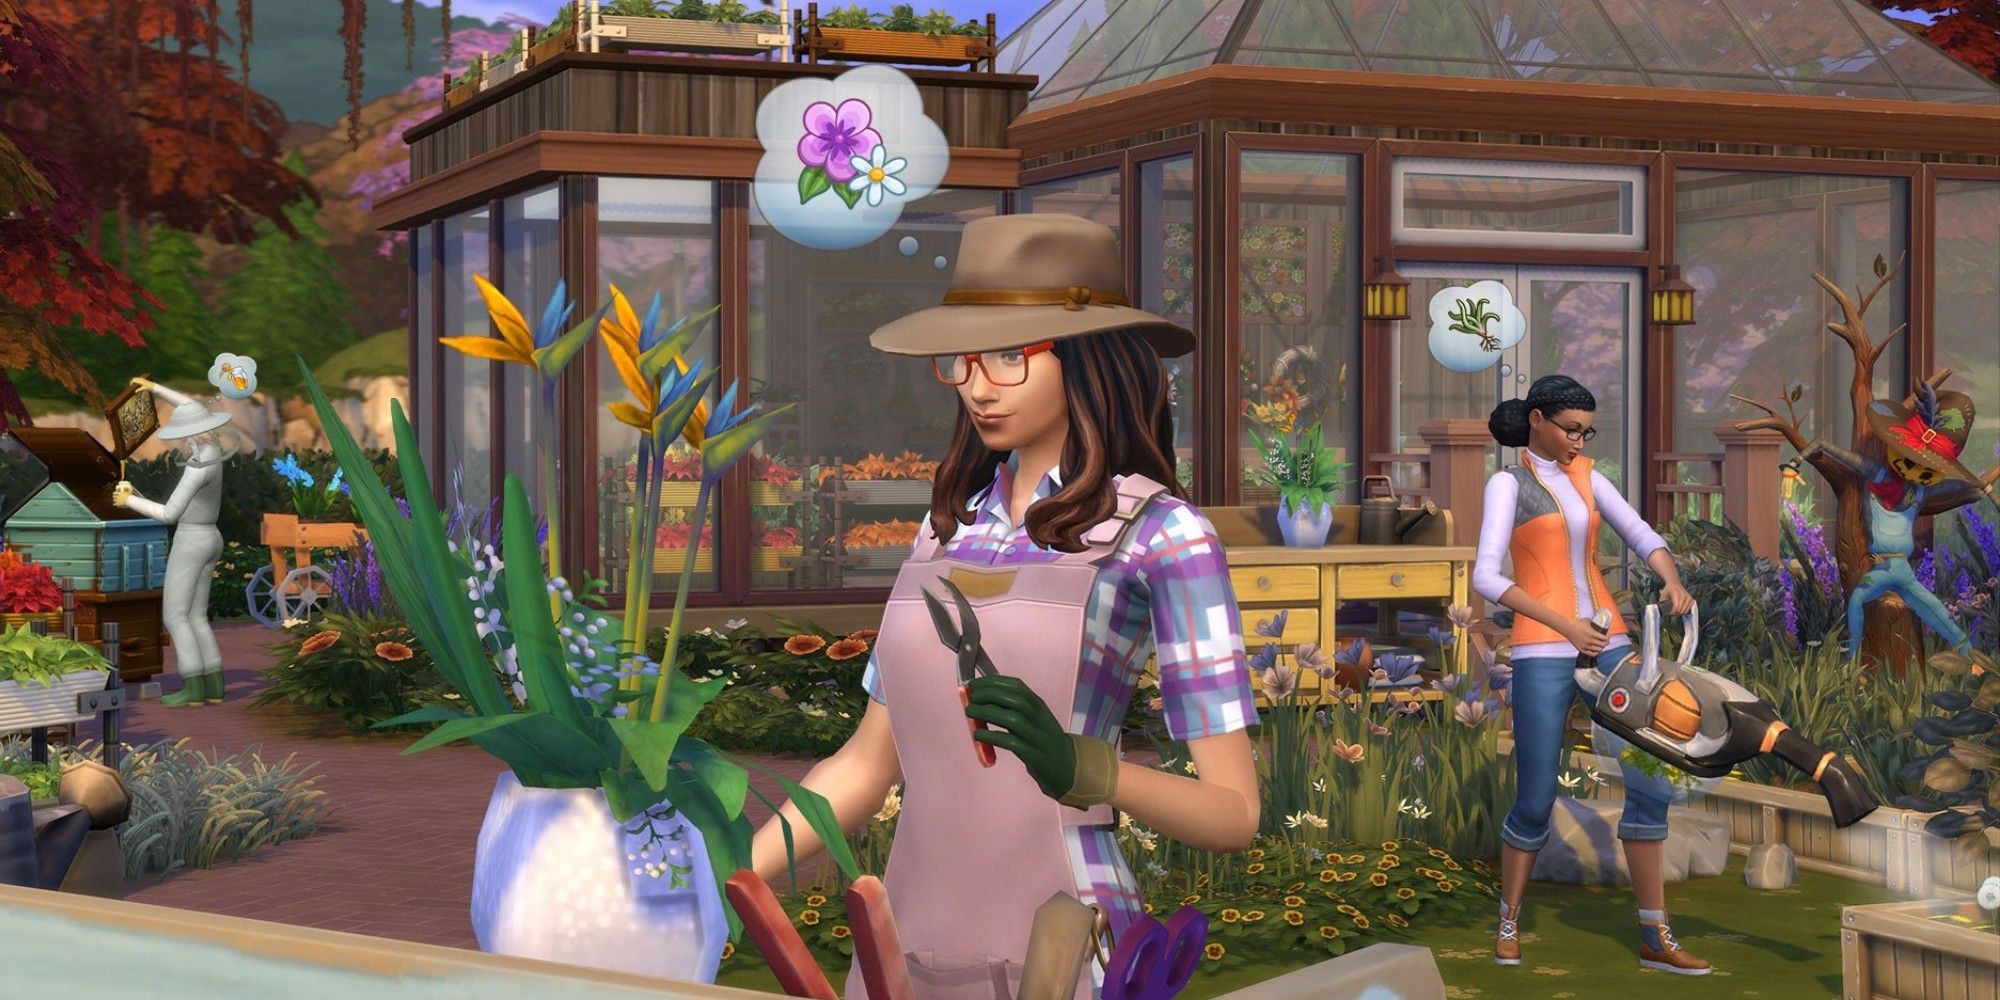 Sims performing various gardening tasks outside.